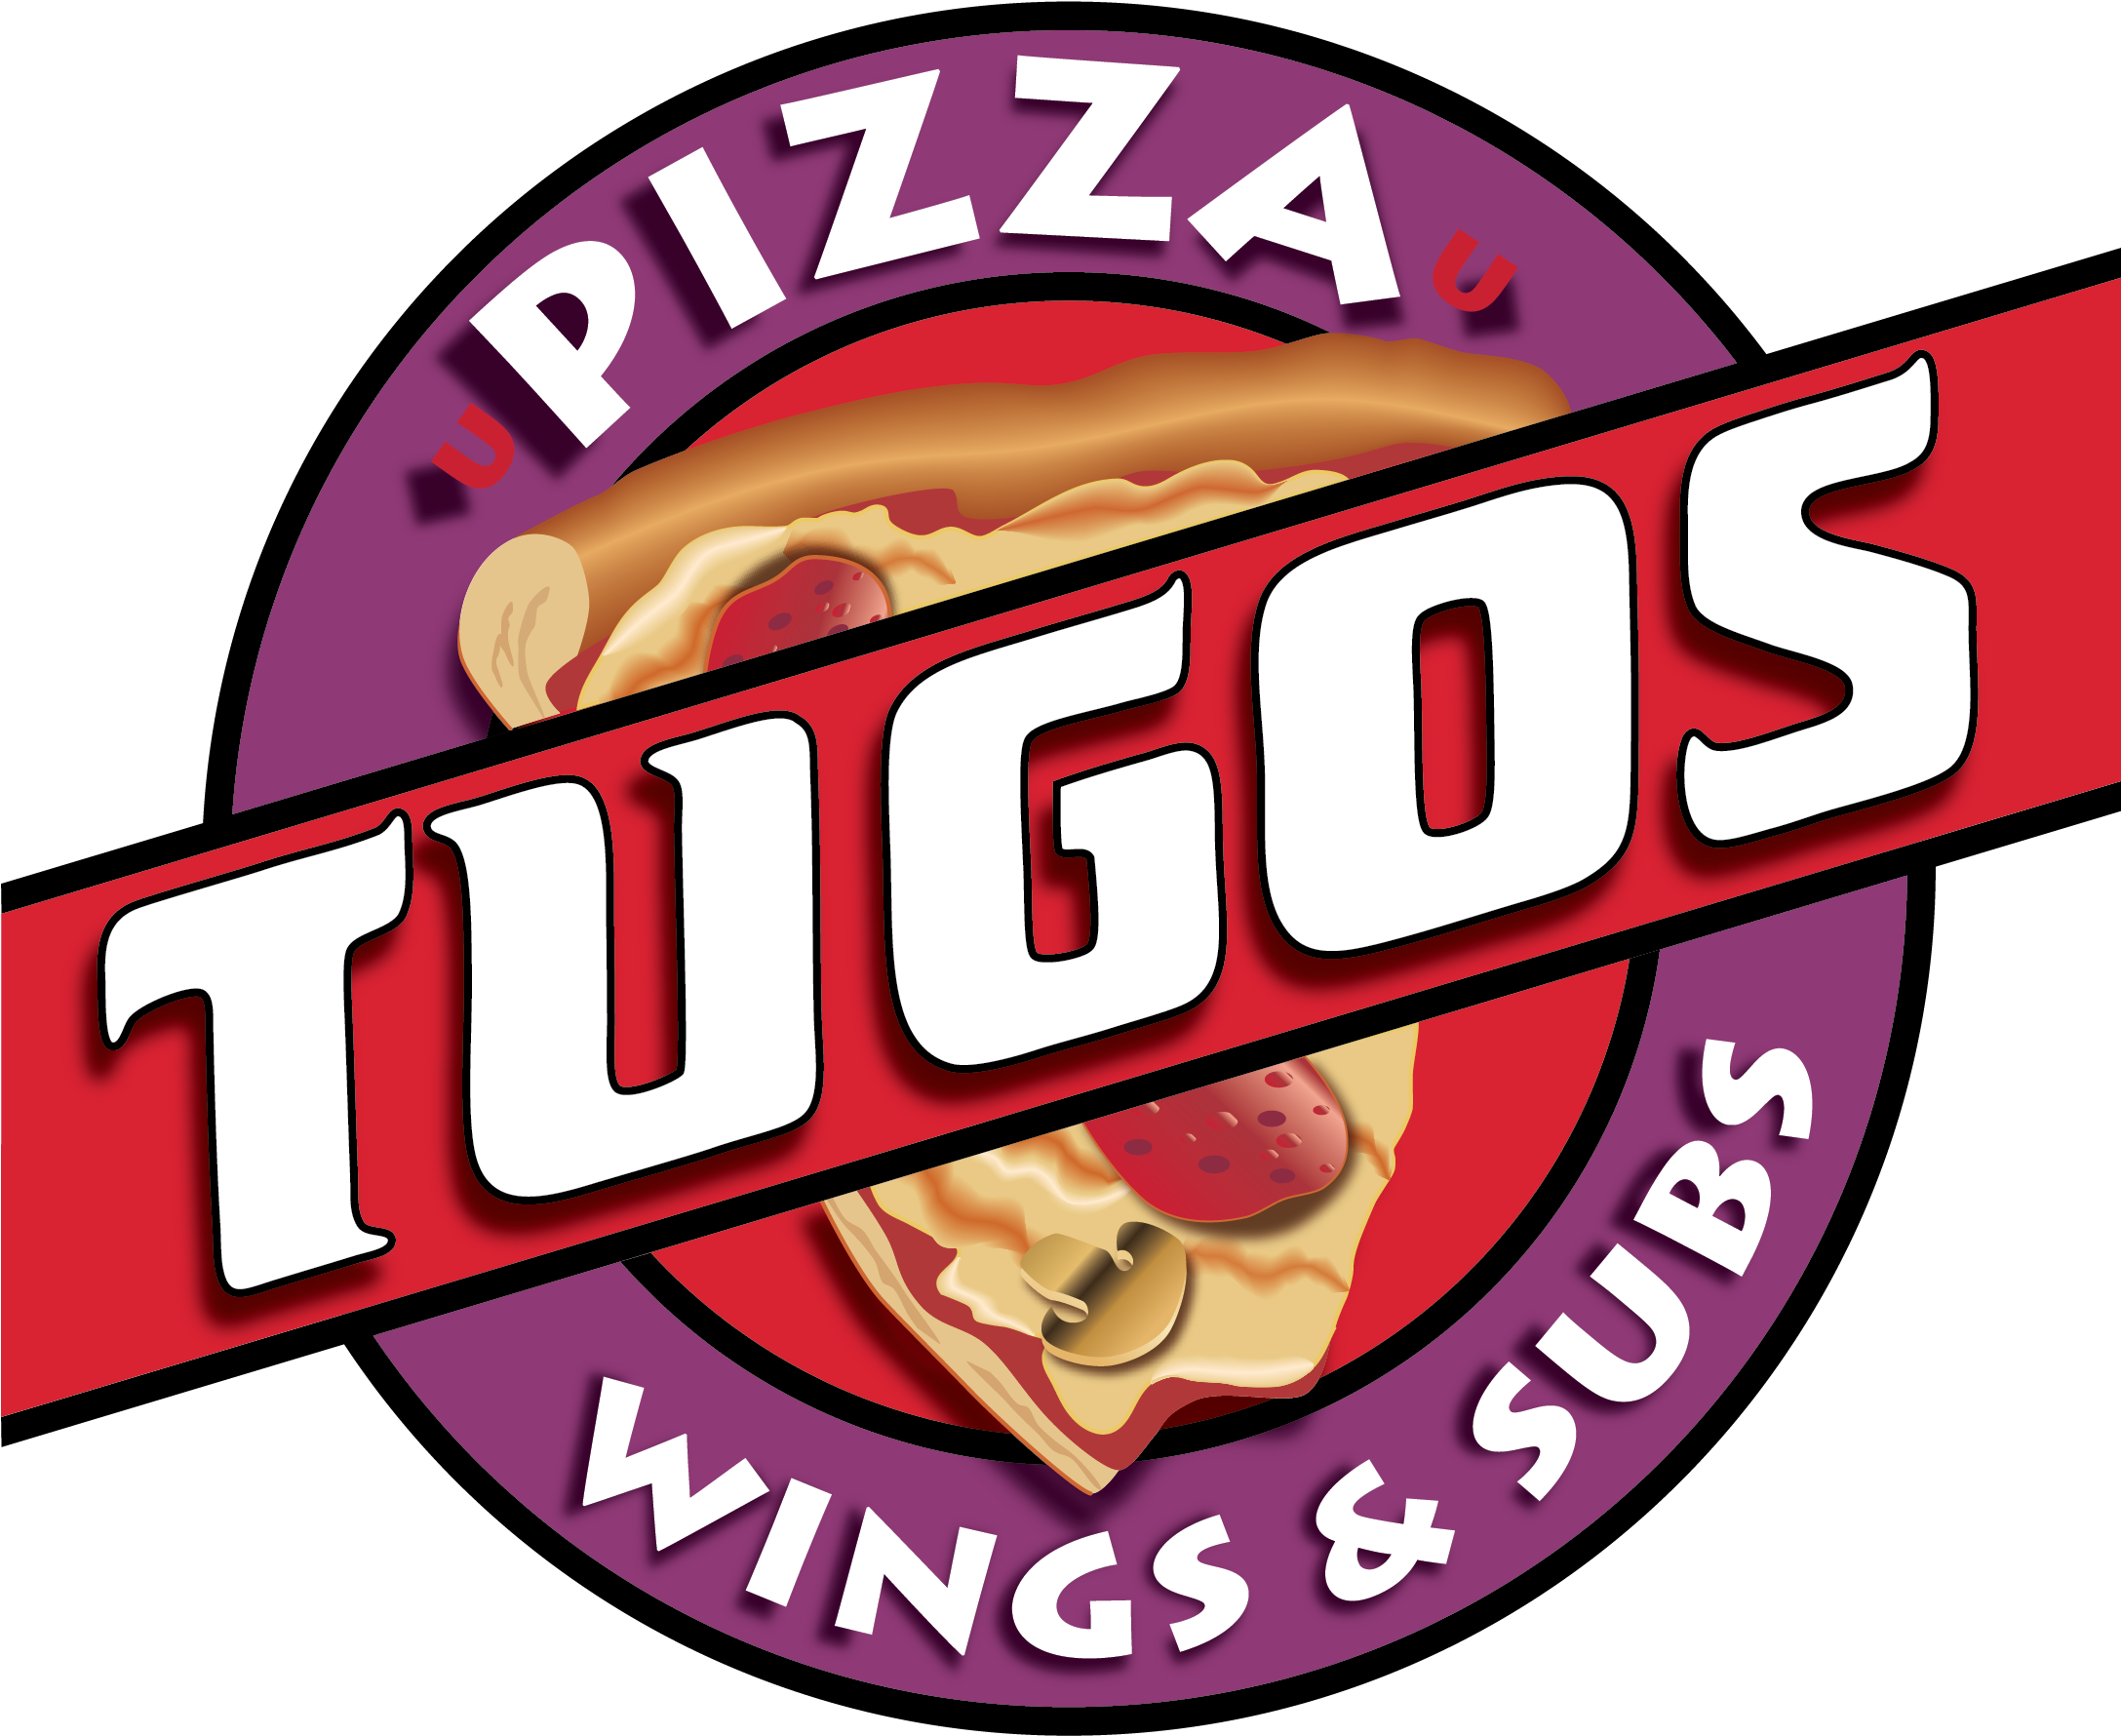 Mdm Pizza Tugos Logo - Pizza (2174x1811)